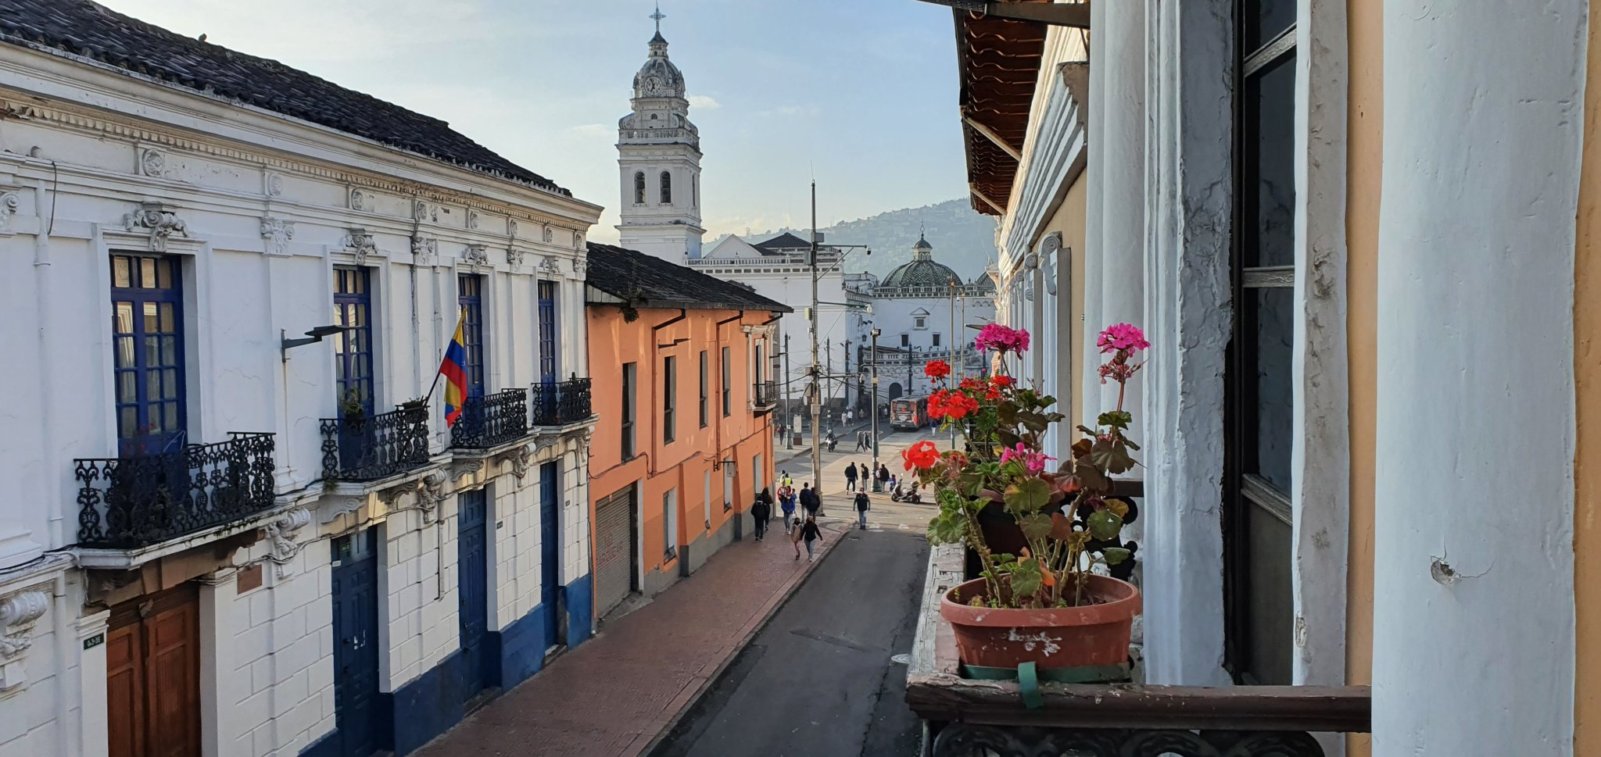 Ecuador Quito, Quito old town, Quito historical centre, quito historical center, quito la ronda, quito balconies, ecuador traditional houses, quito trip, quito itinerary